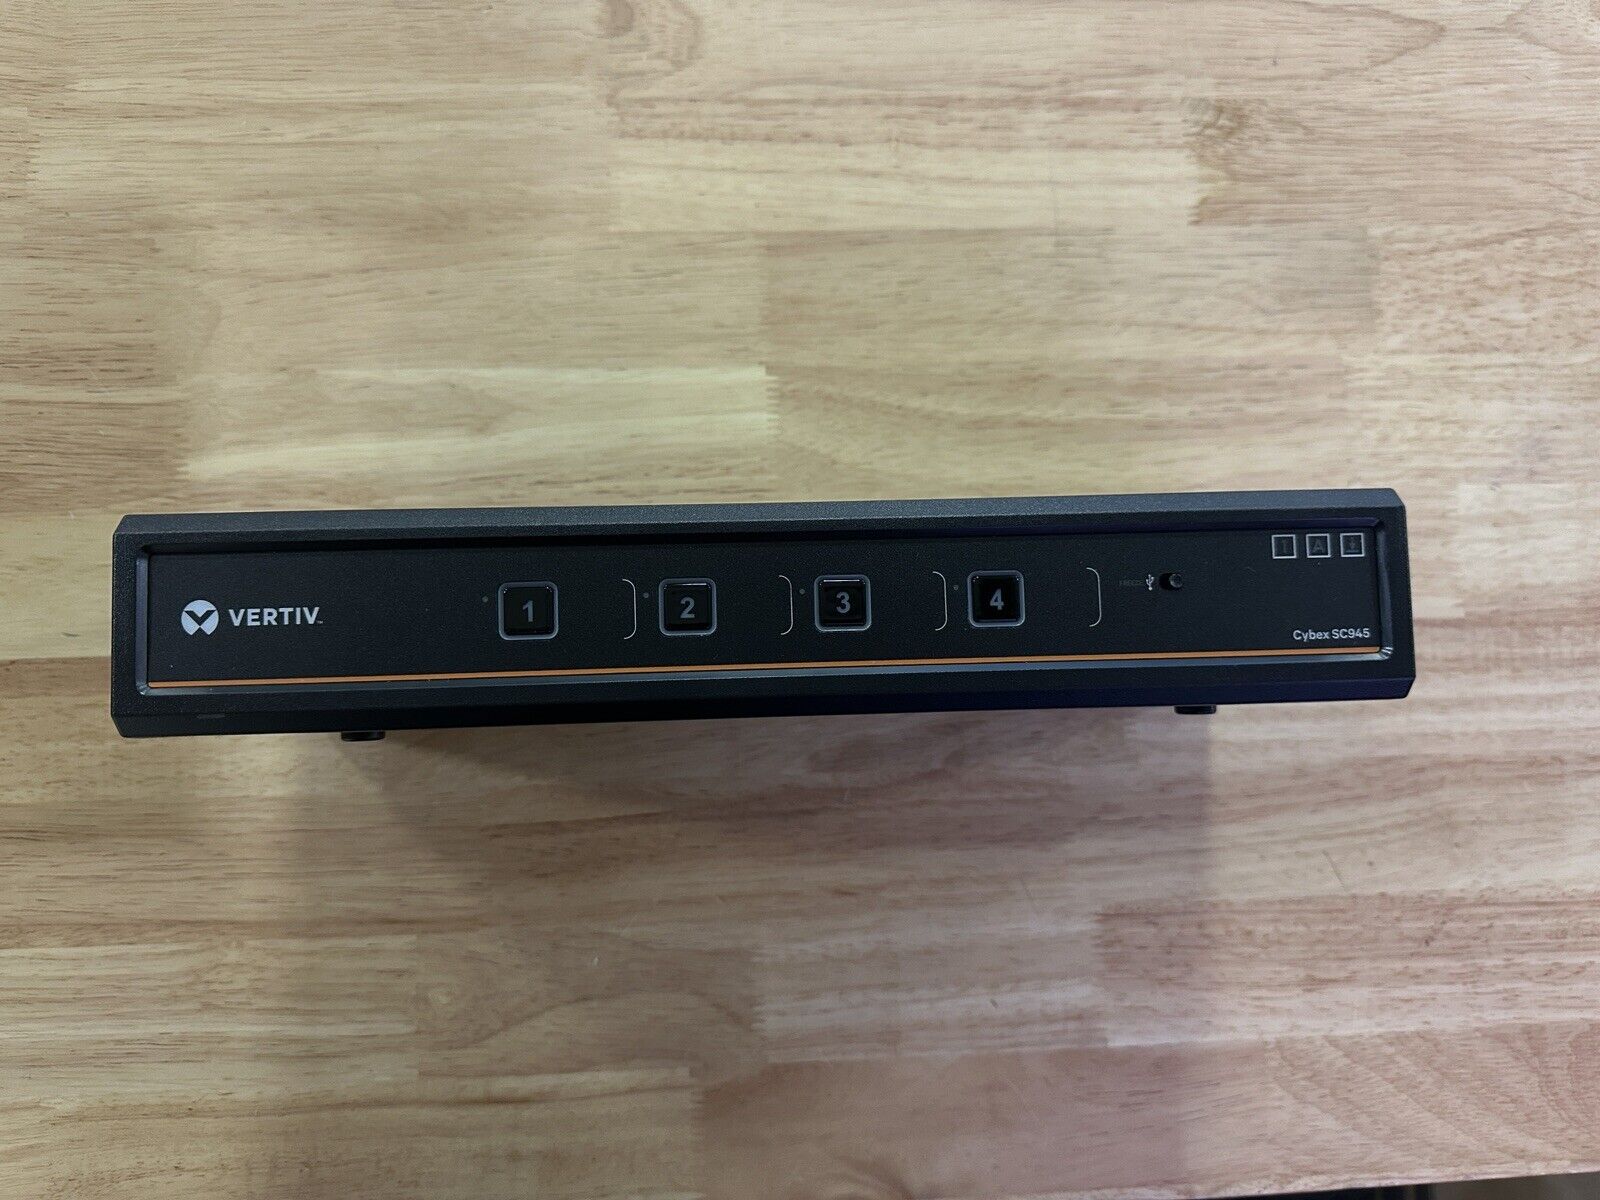 Vertiv Cybex SC945-001 Secure Desktop KVM Switch 4-Port DVI-I DPP